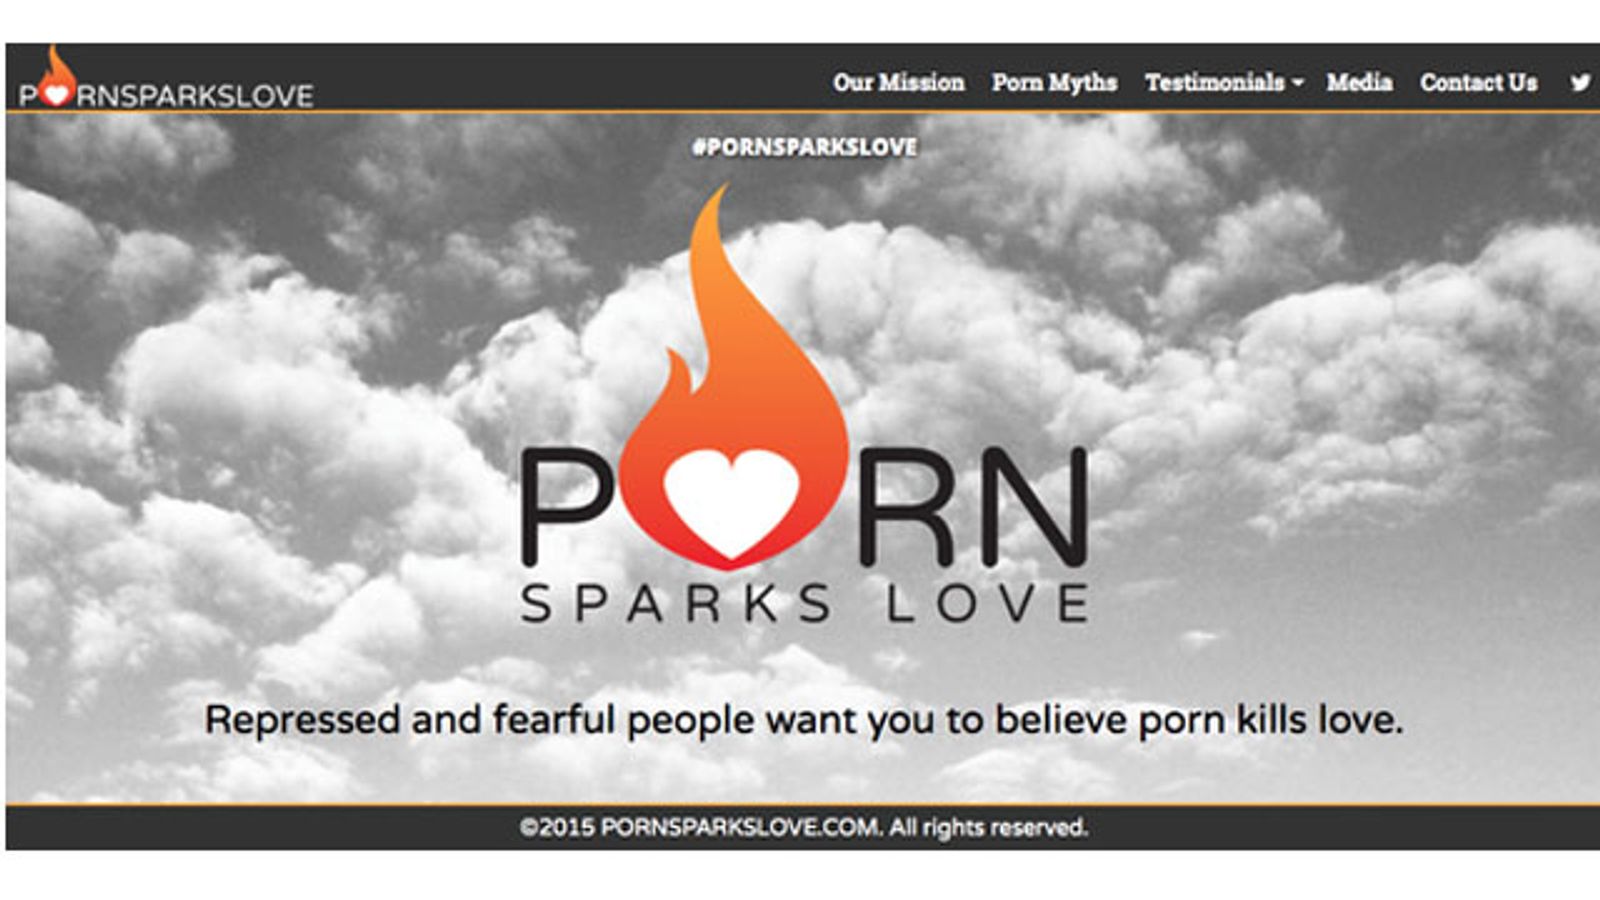 GameLink Develops ‘Porn Sparks Love’ Campaign To Combat Anti-Porn Efforts